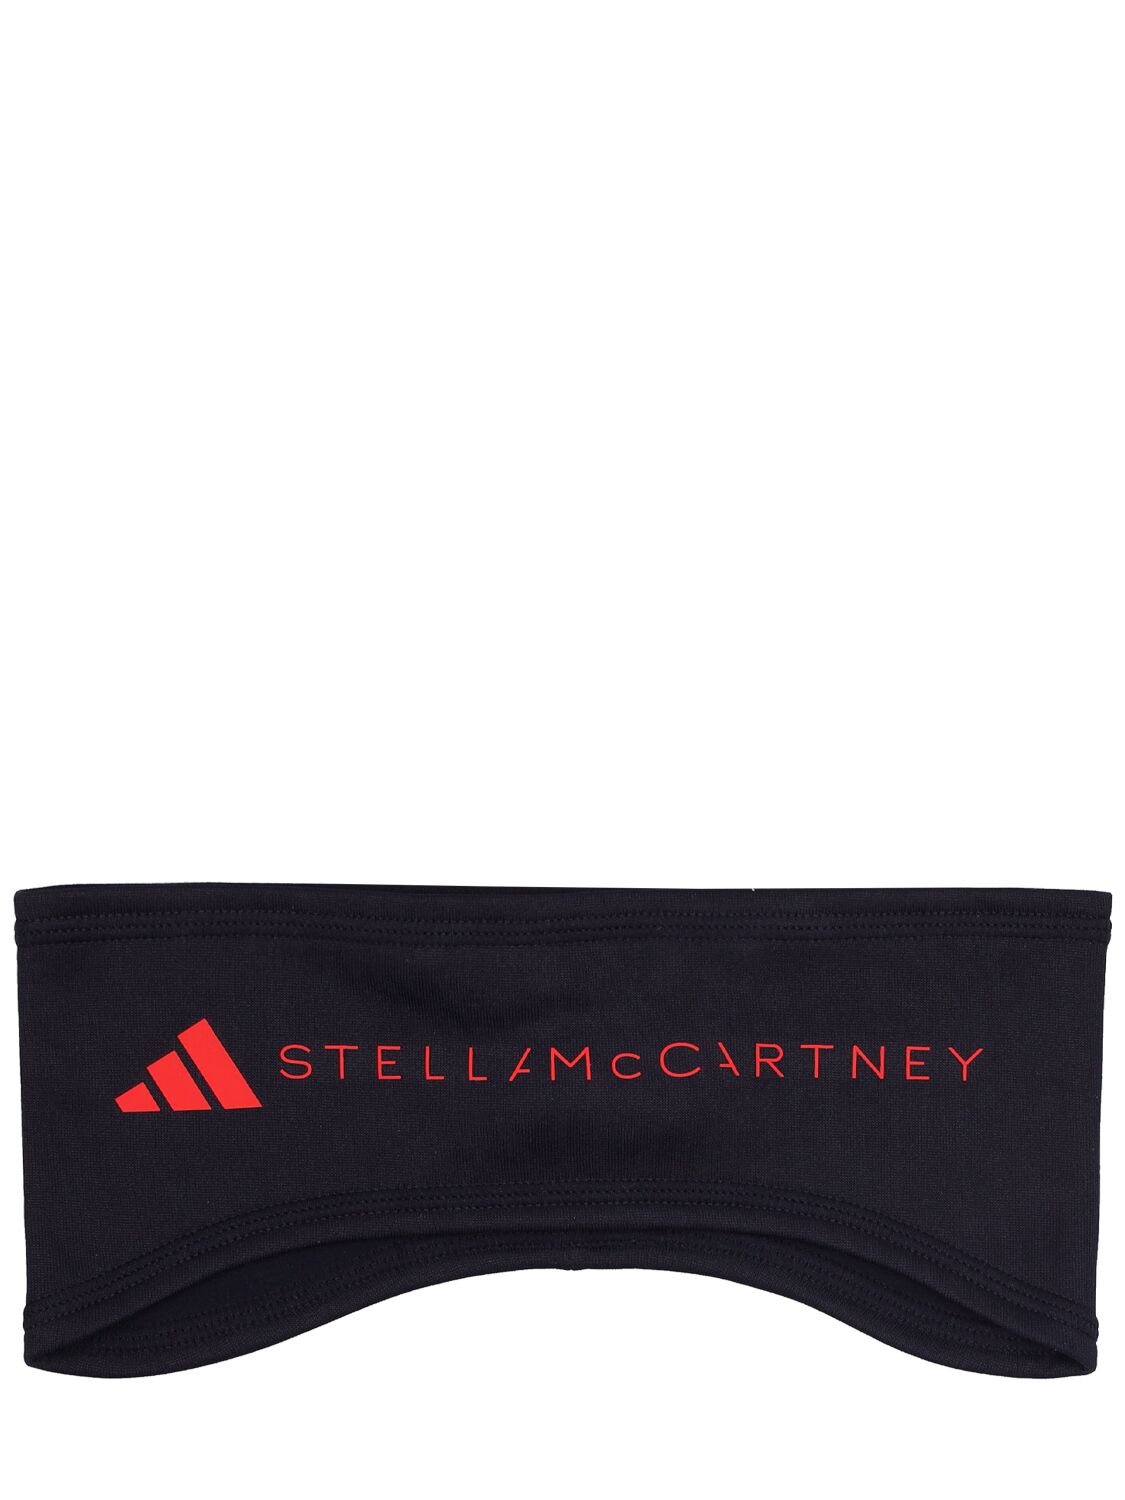 Adidas By Stella Mccartney Terrex Headband In Black